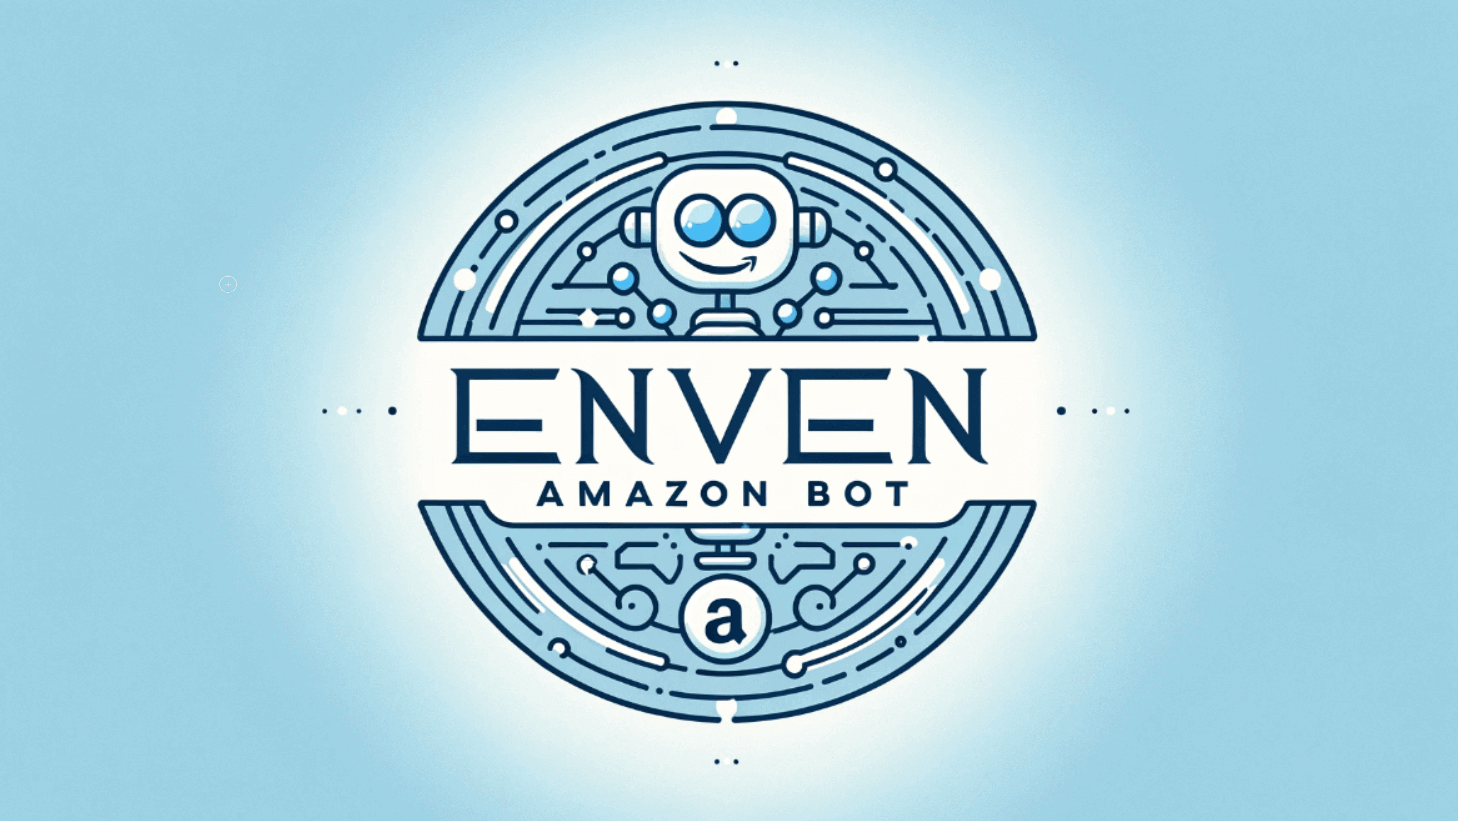 Enven Amazon Bot